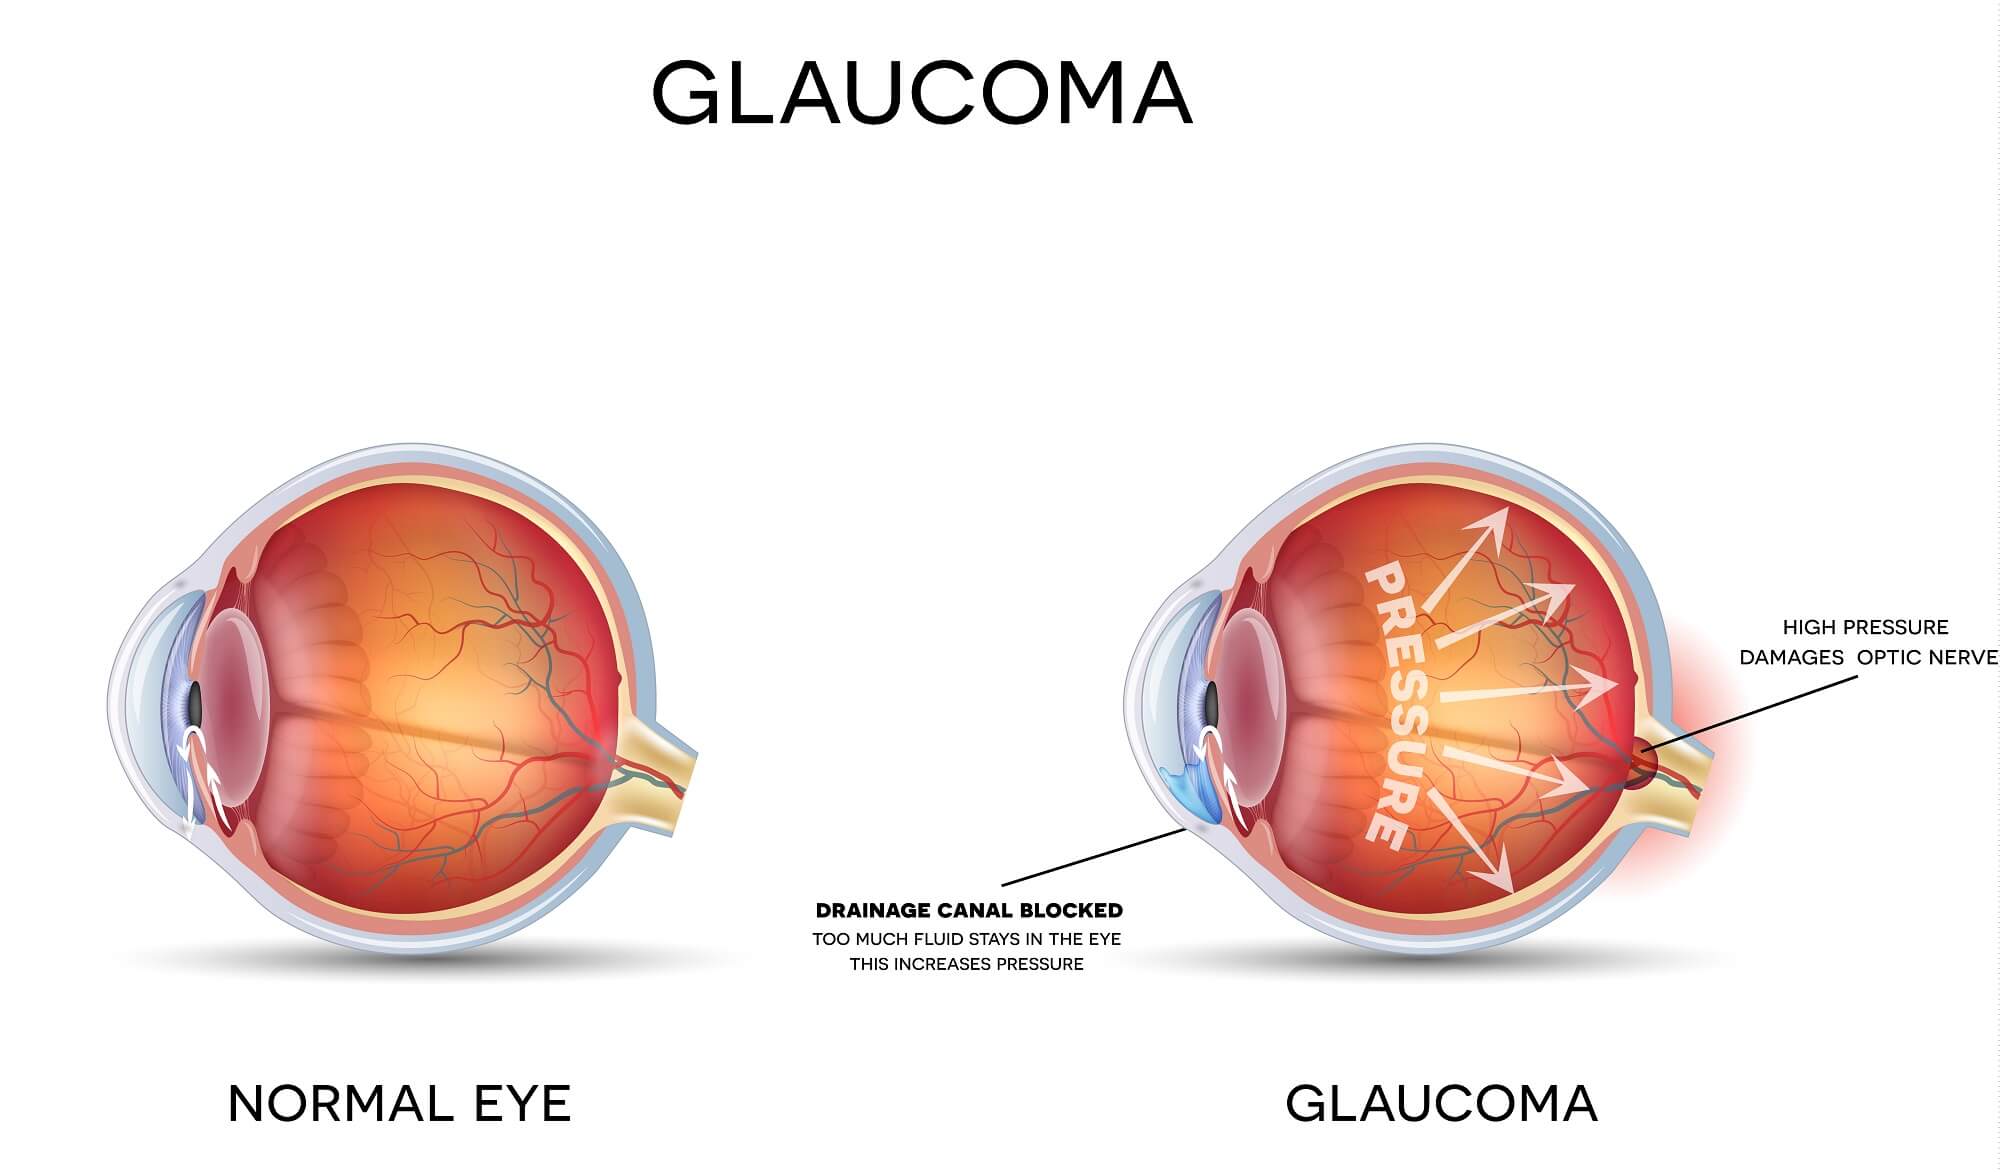 6 Ways to Prevent Glaucoma